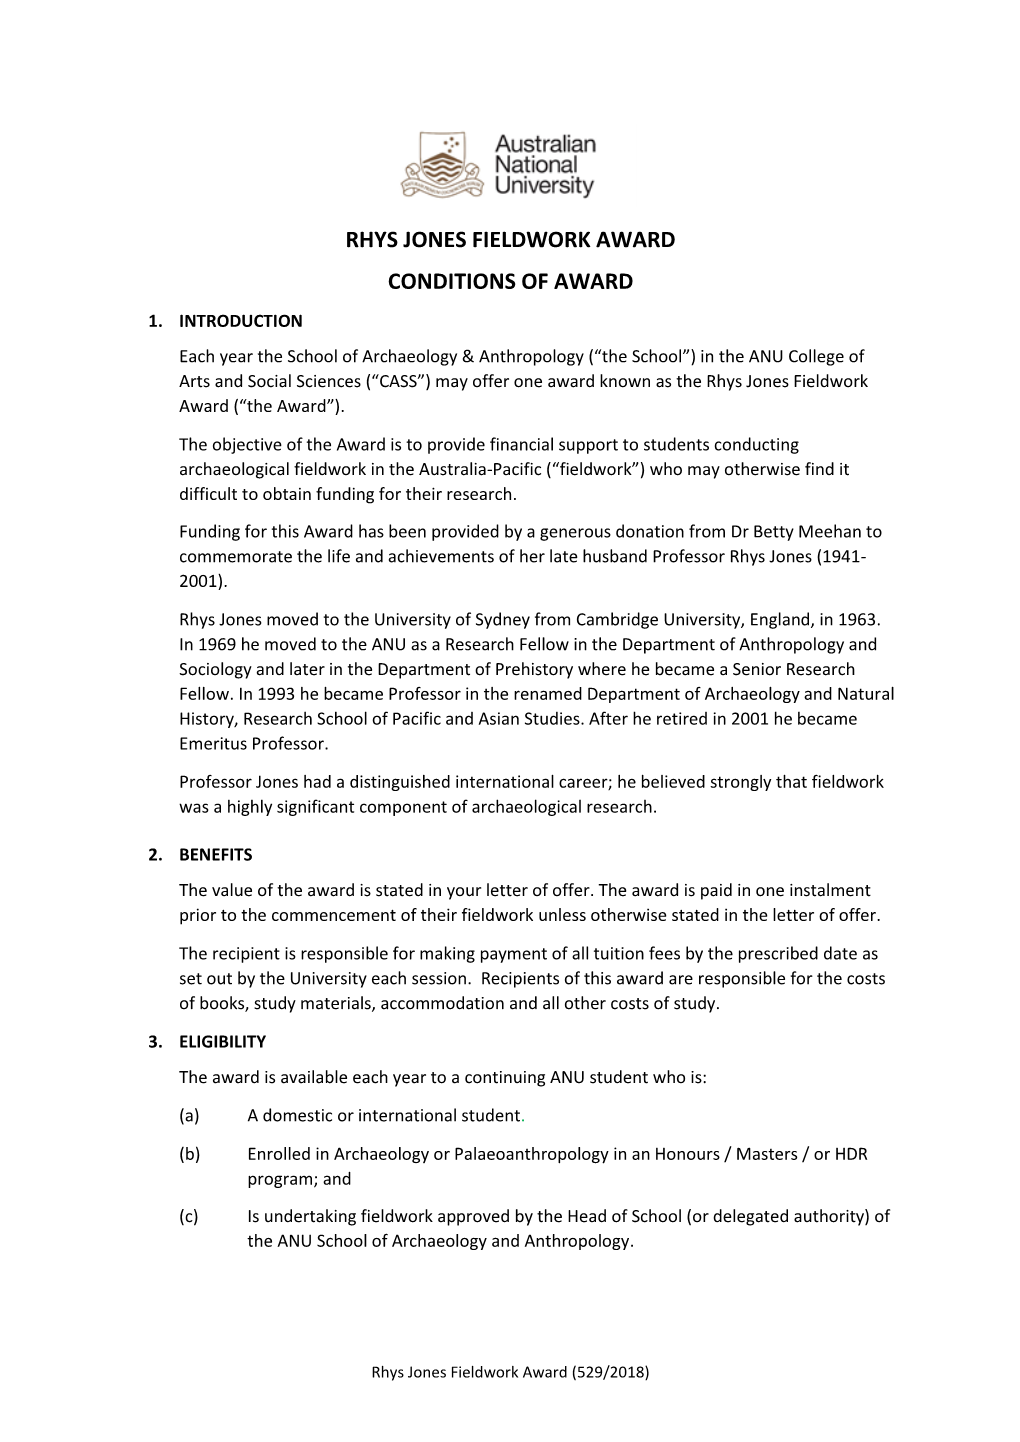 Rhys Jones Fieldwork Award Conditions of Award